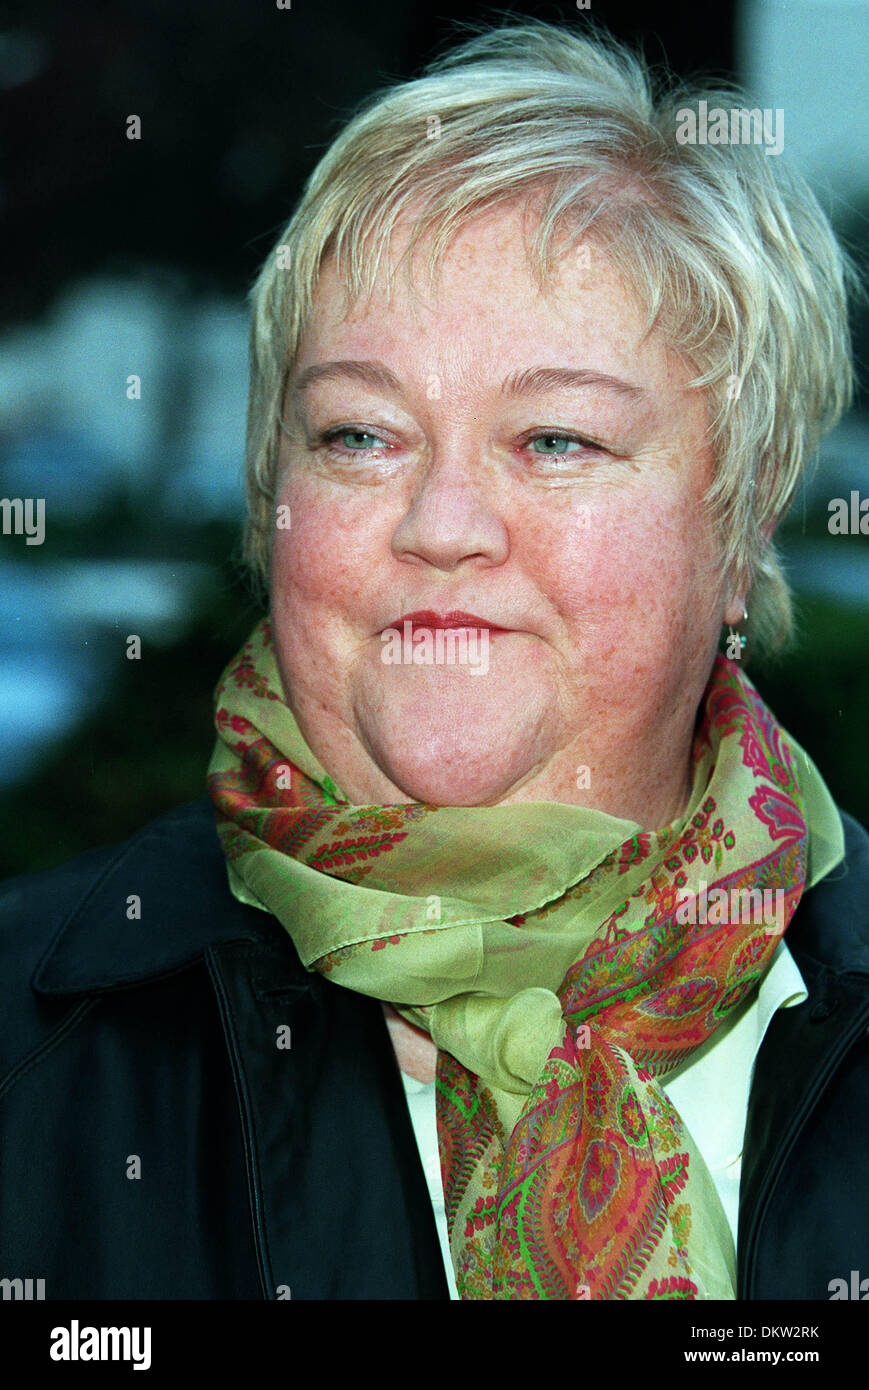 KATHY KINNEY.ACTRESS.LOS ANGELES, USA.02/12/2001.BN34G31 Stock Photo